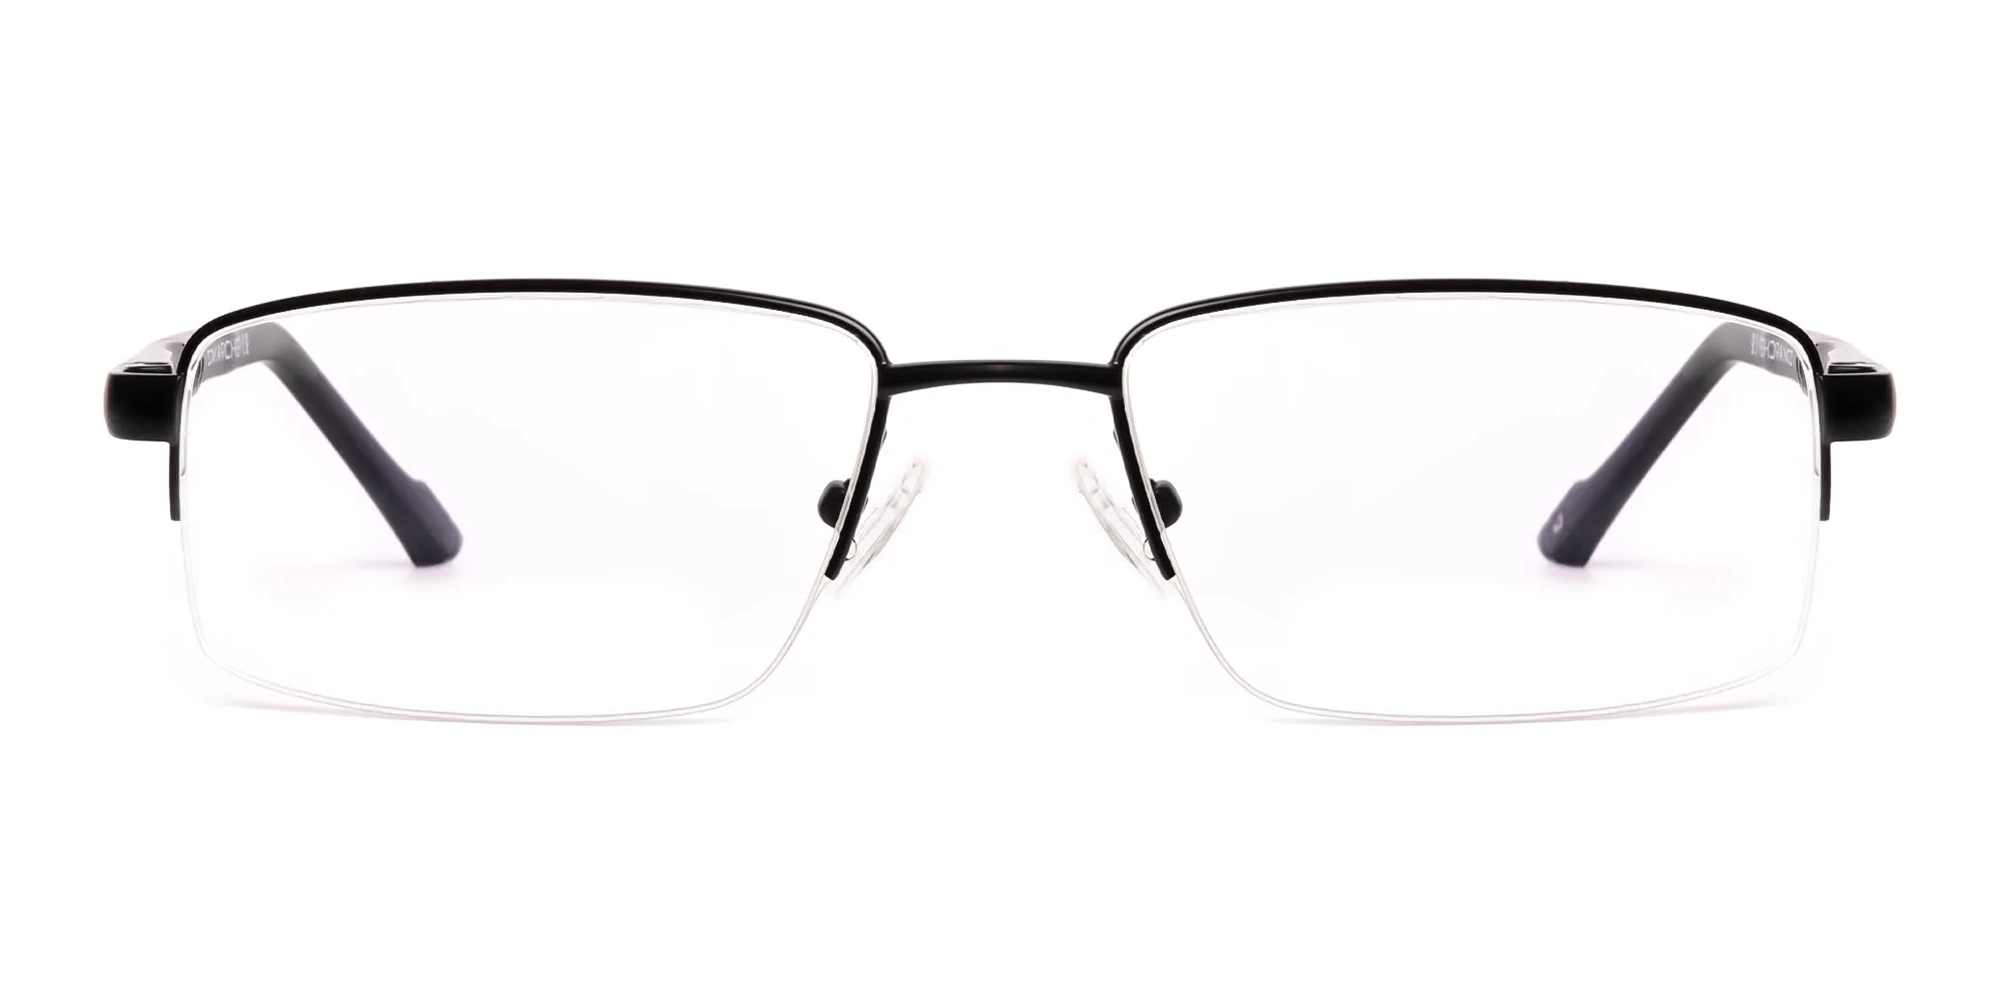 simple black half rim rectangular glasses frames -2